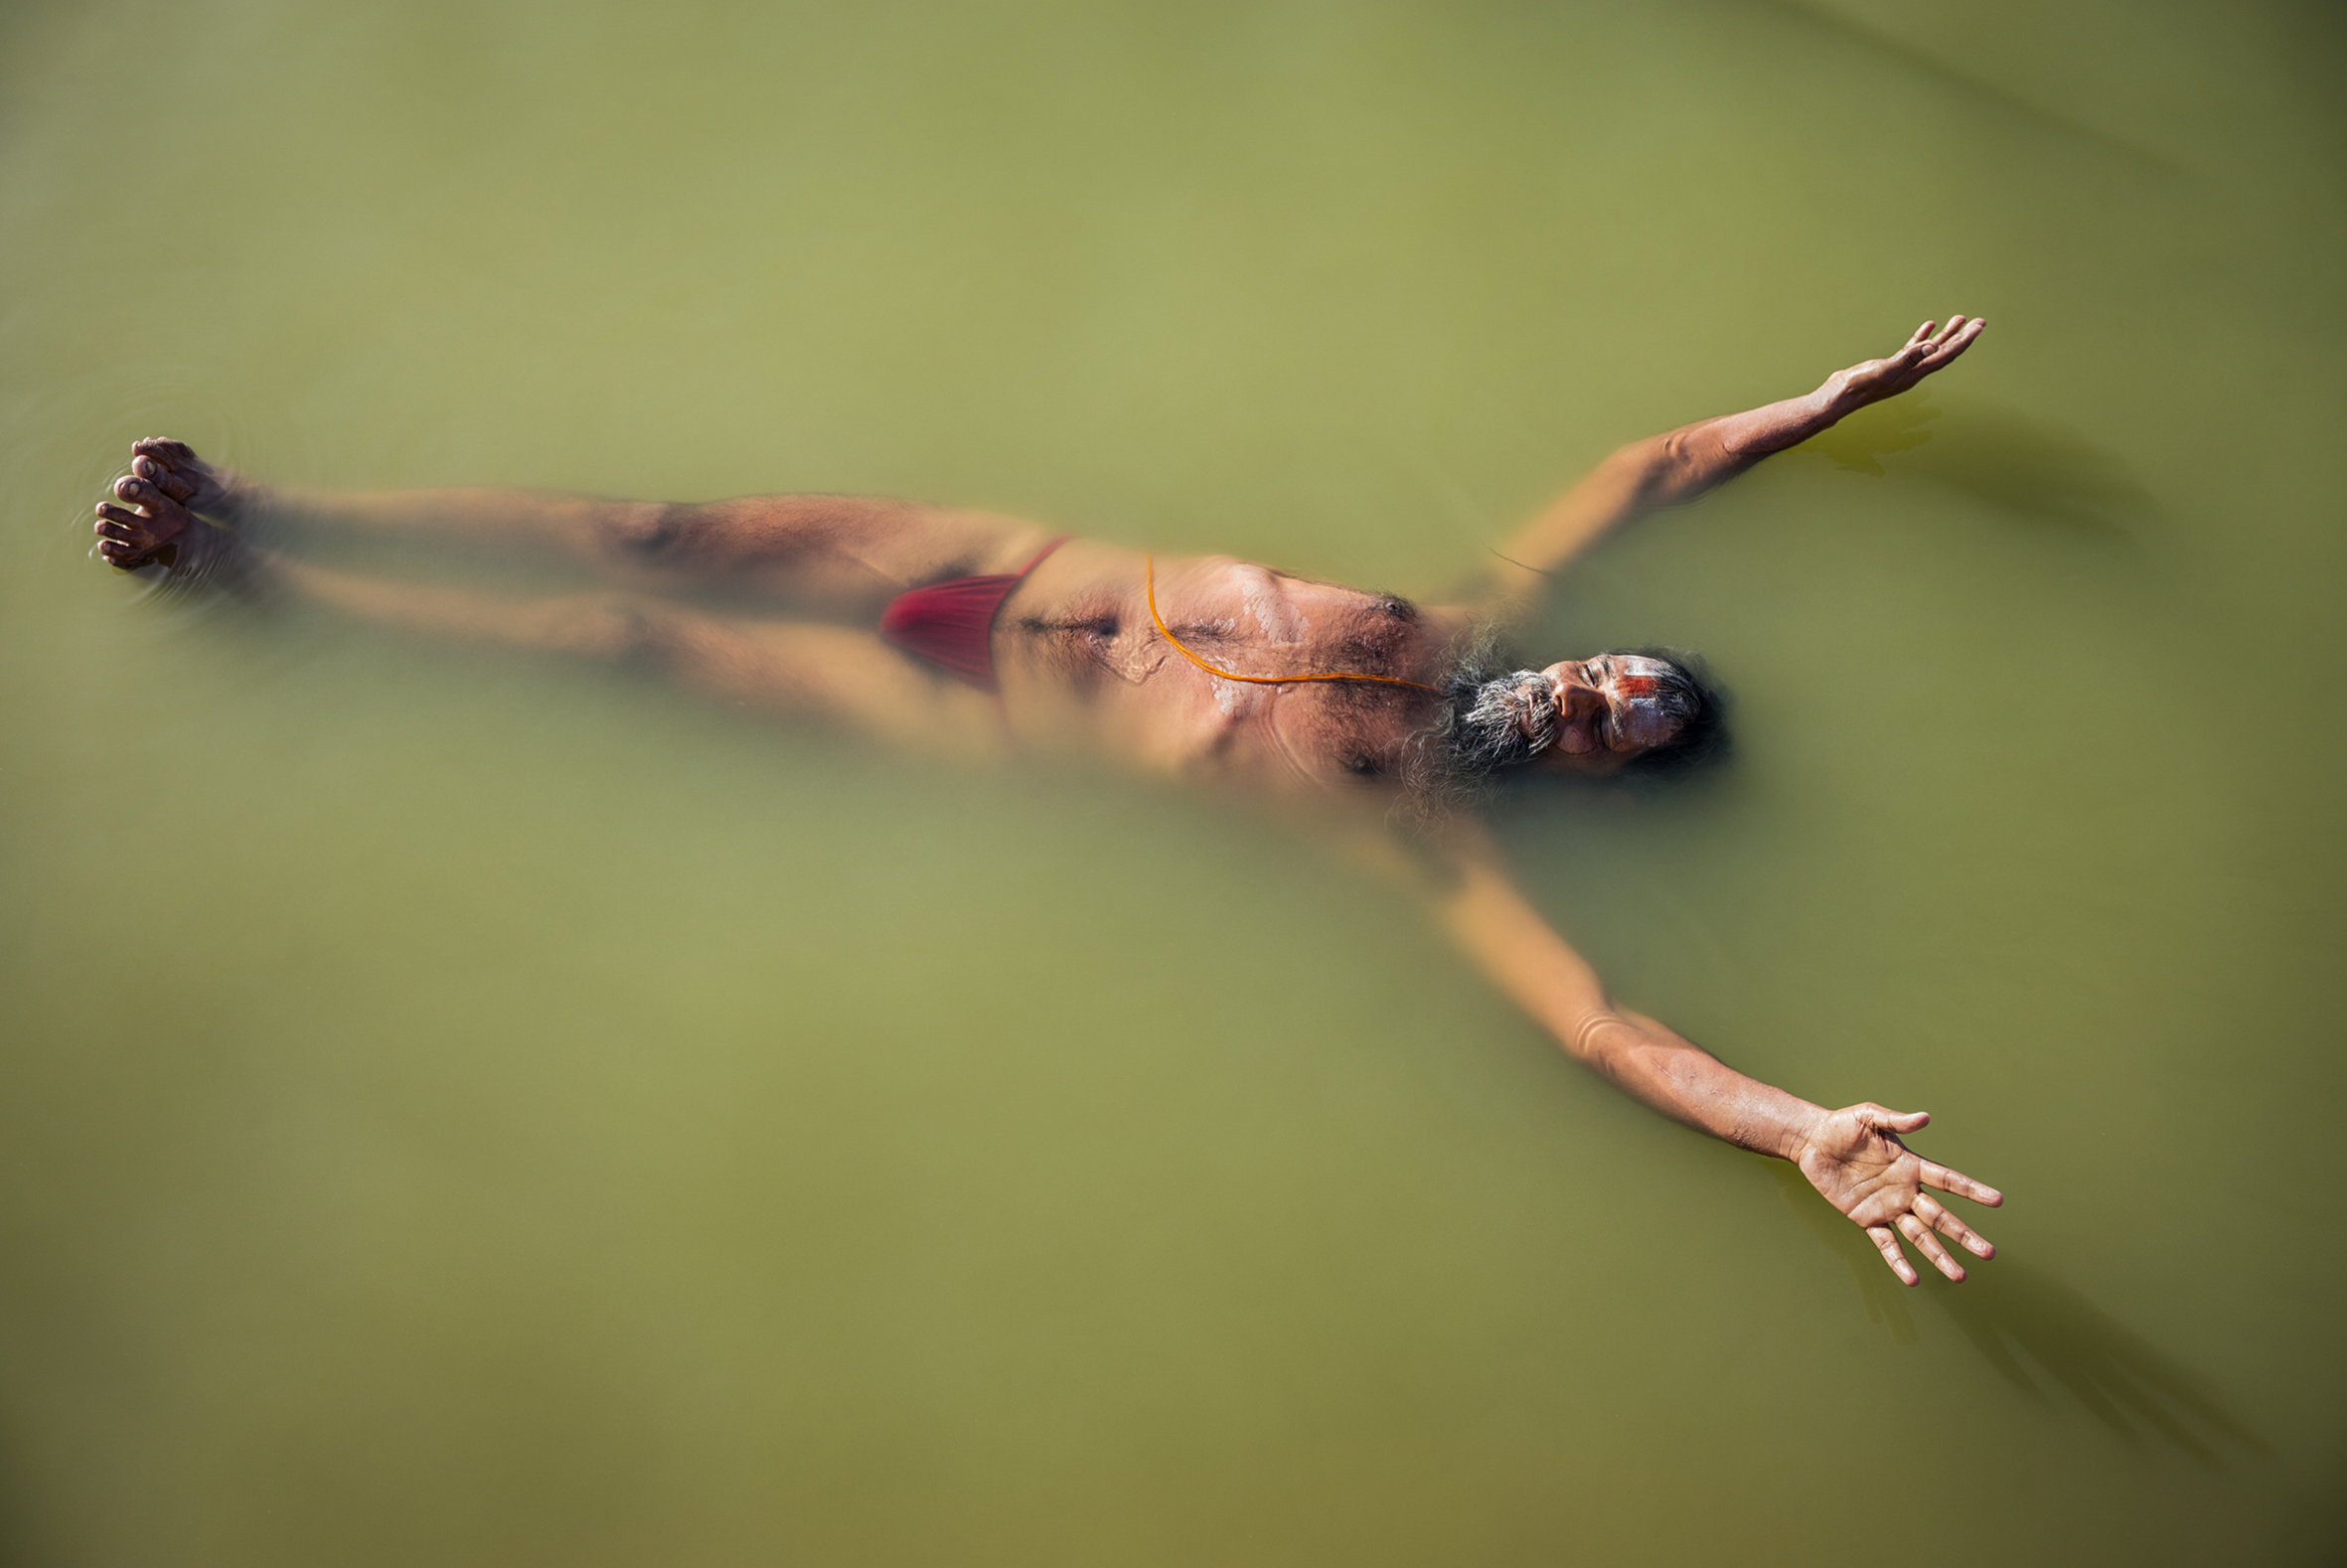 Andy Richter, On the Shira River, Kumbh Mela (Simhasth), Ujjain, India, April 25, 2016 - The Culturium